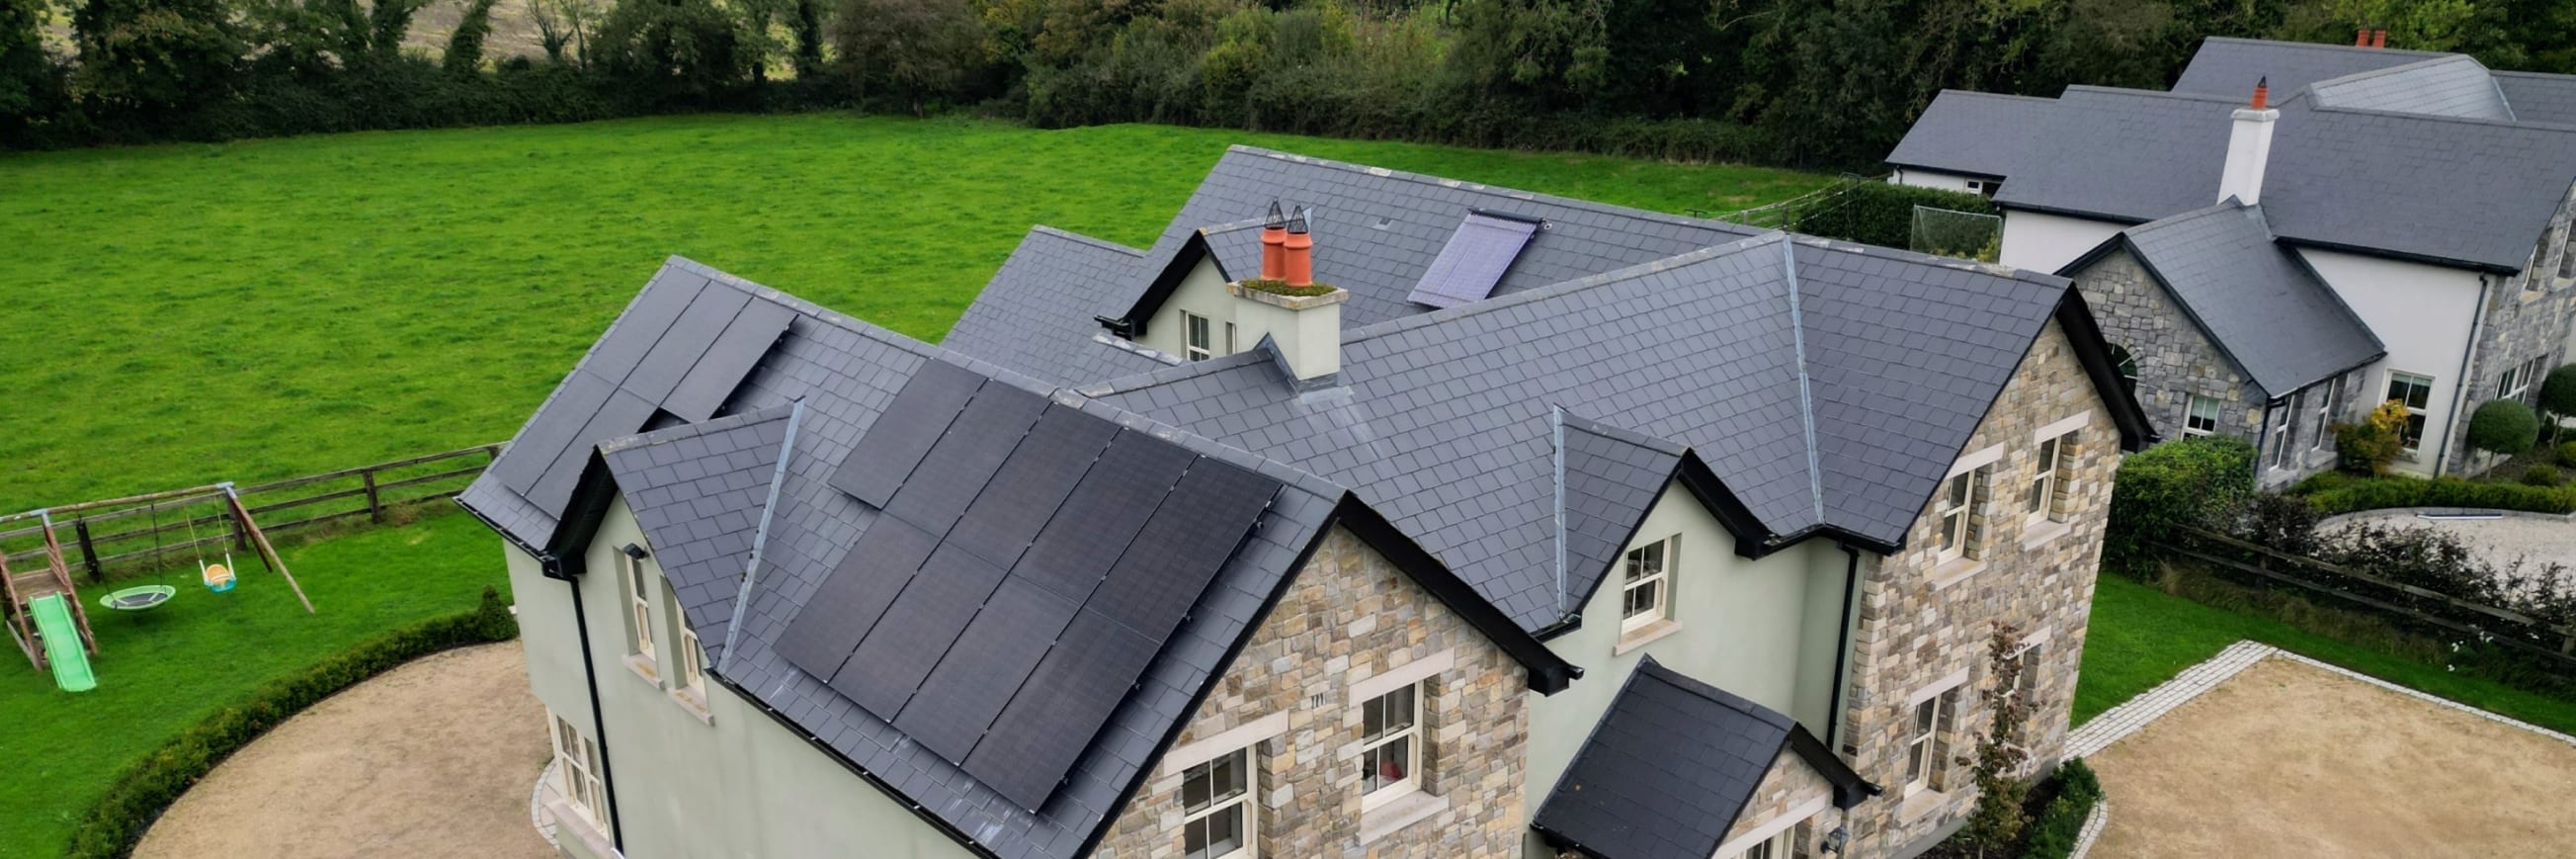 PureVolt installation of Solar Panels on a house in Dublin